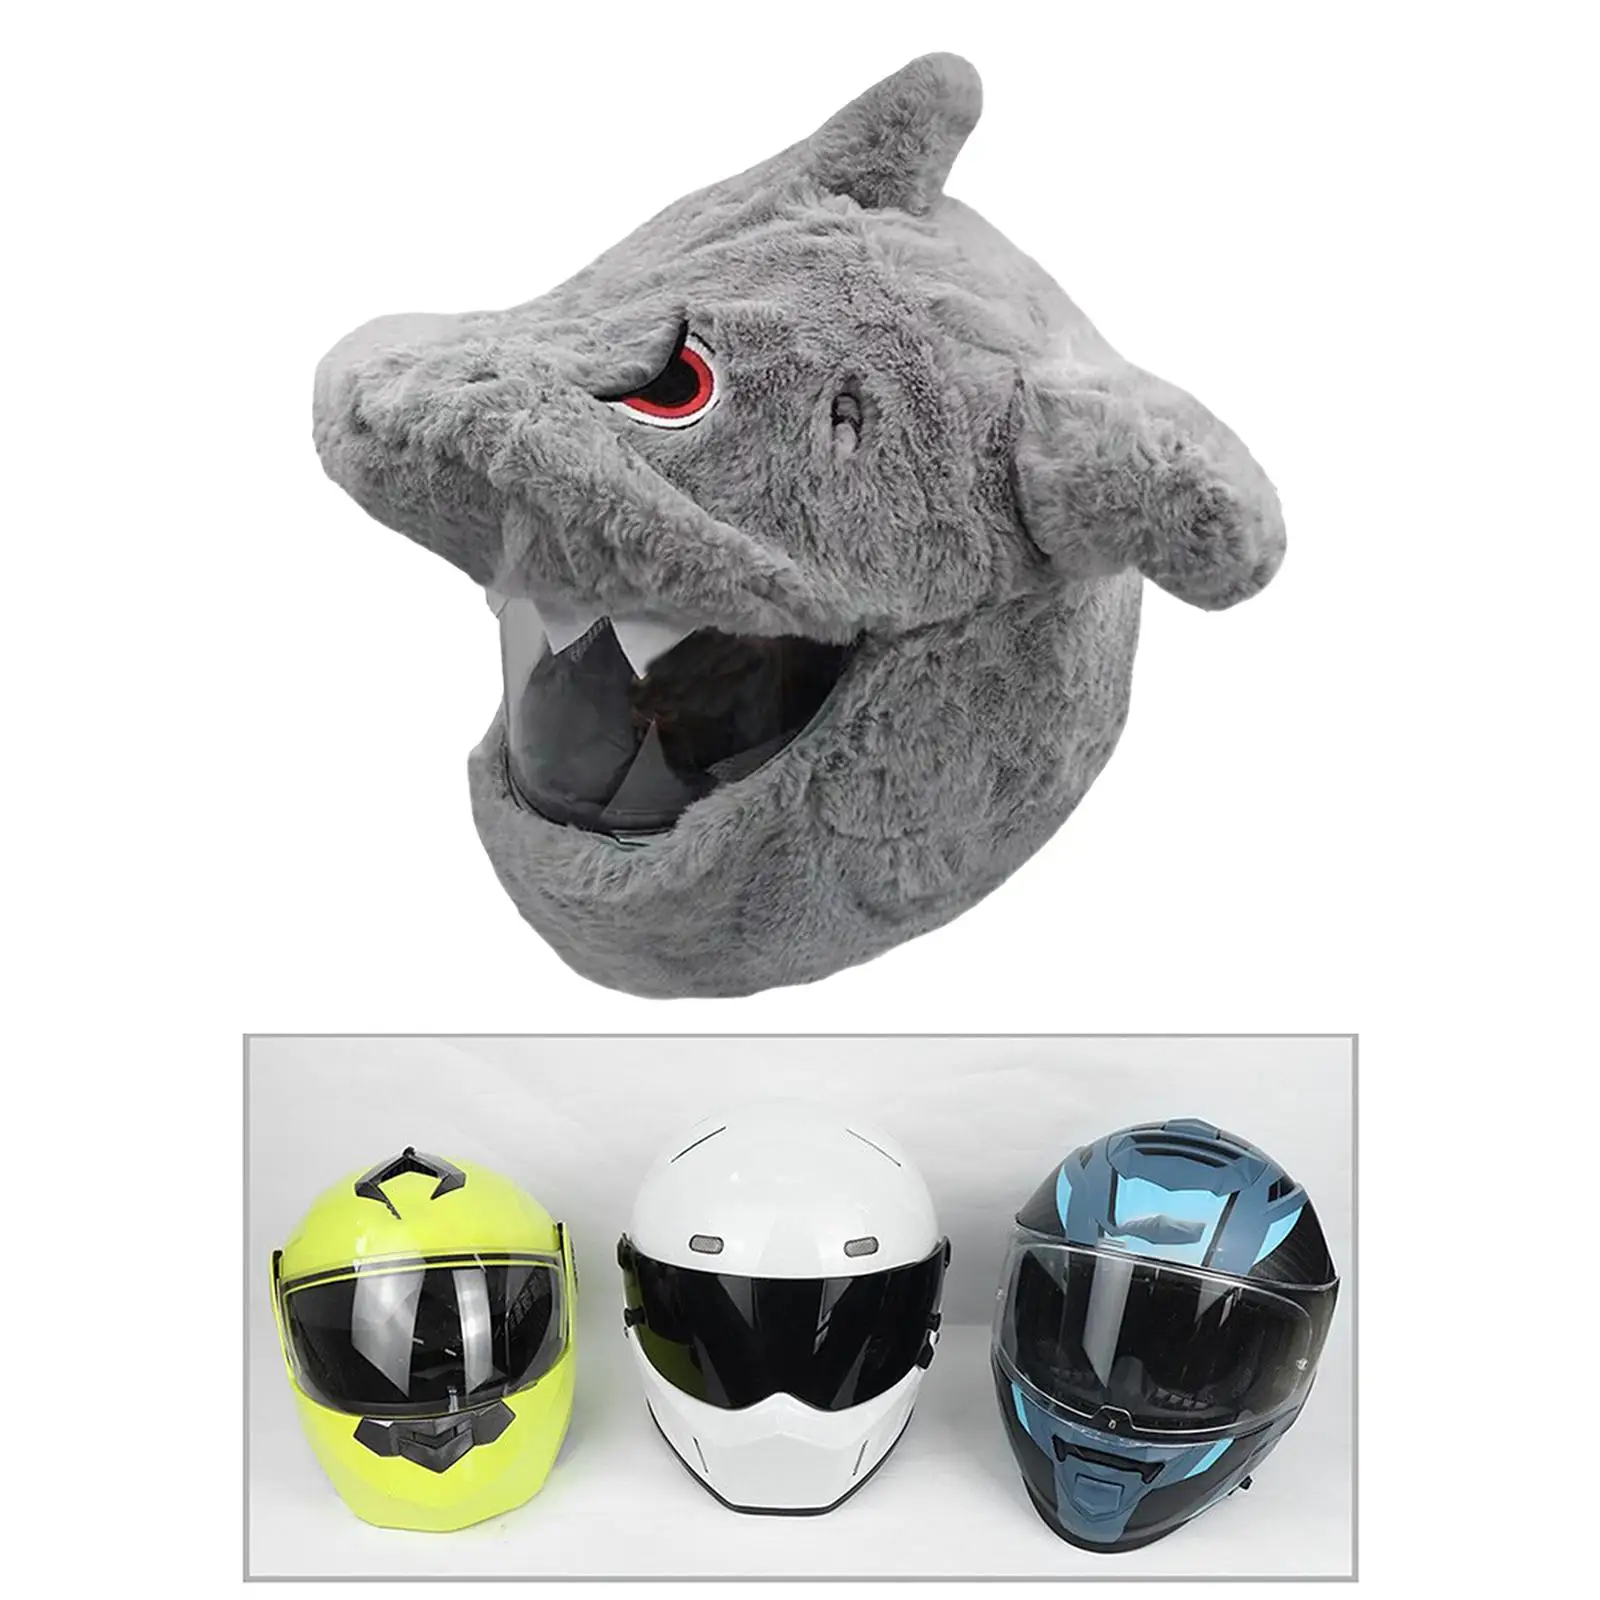 Motorcycle Helmet Cover Cute Helmet Accessory Moto Gear Cute Furry Helmet Cover for Outdoor Riding Girls and Boys Men Women